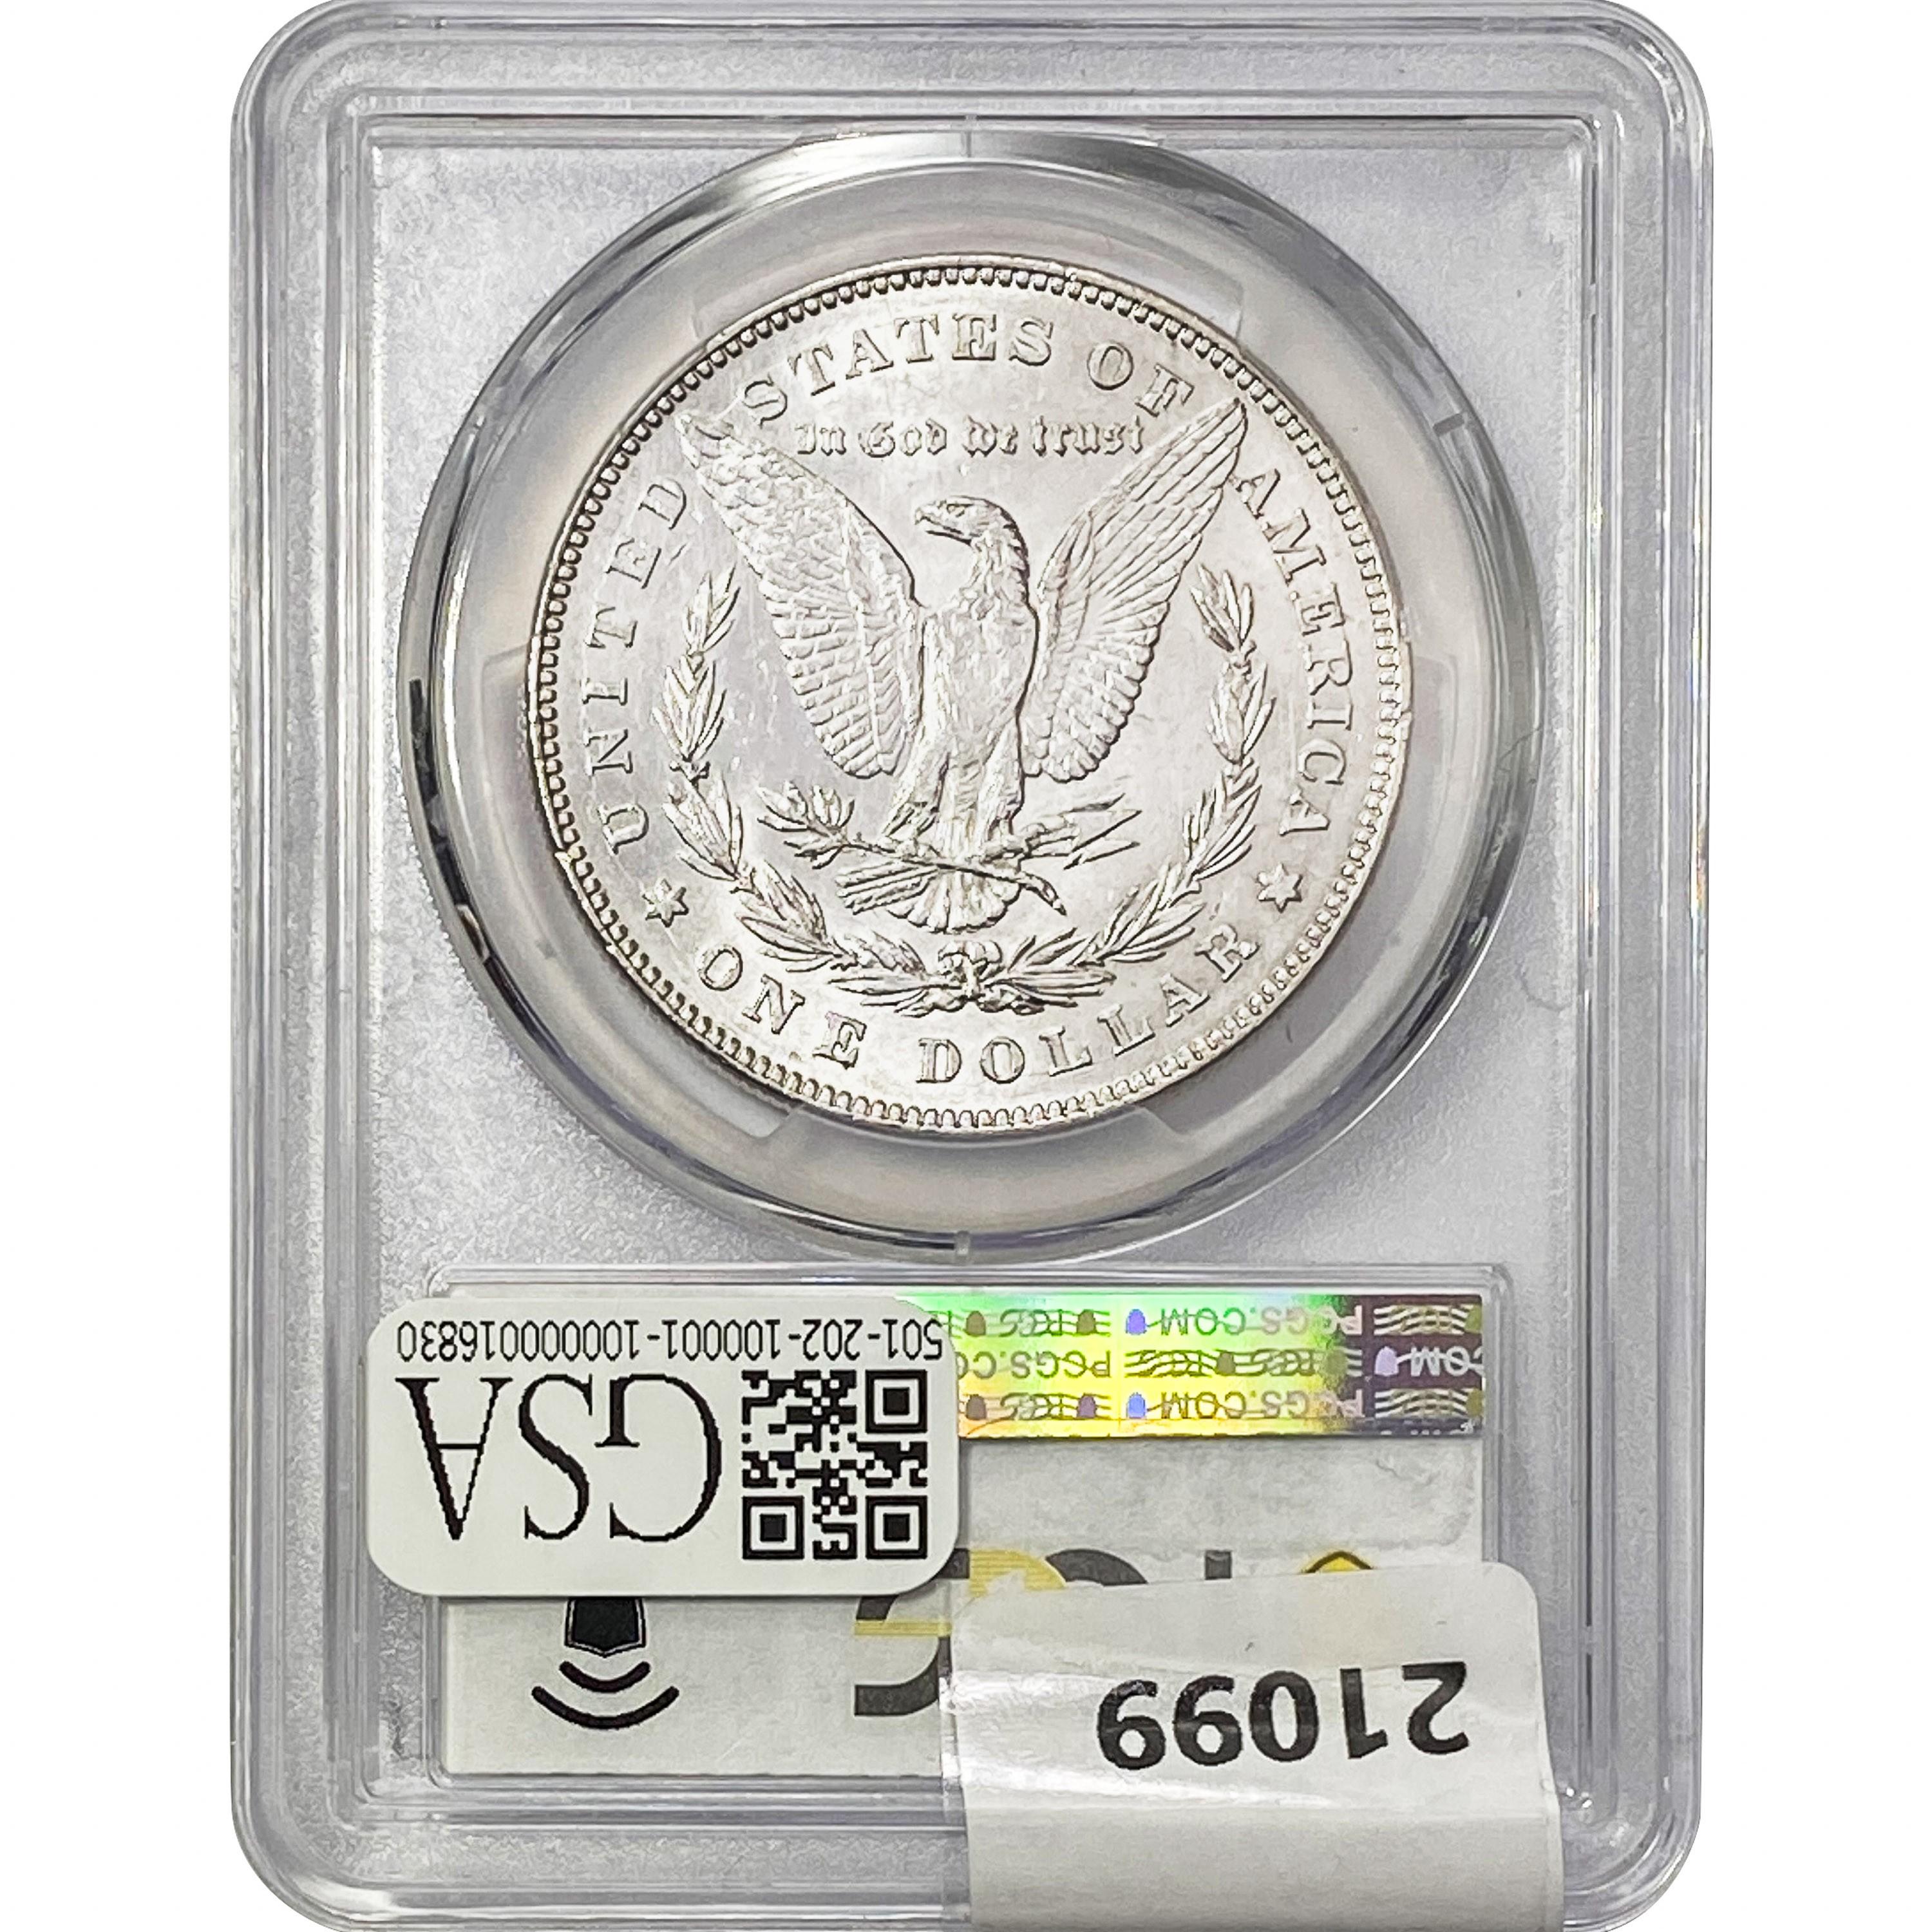 1878 7/8TF Morgan Silver Dollar PCGS AU55 Strong